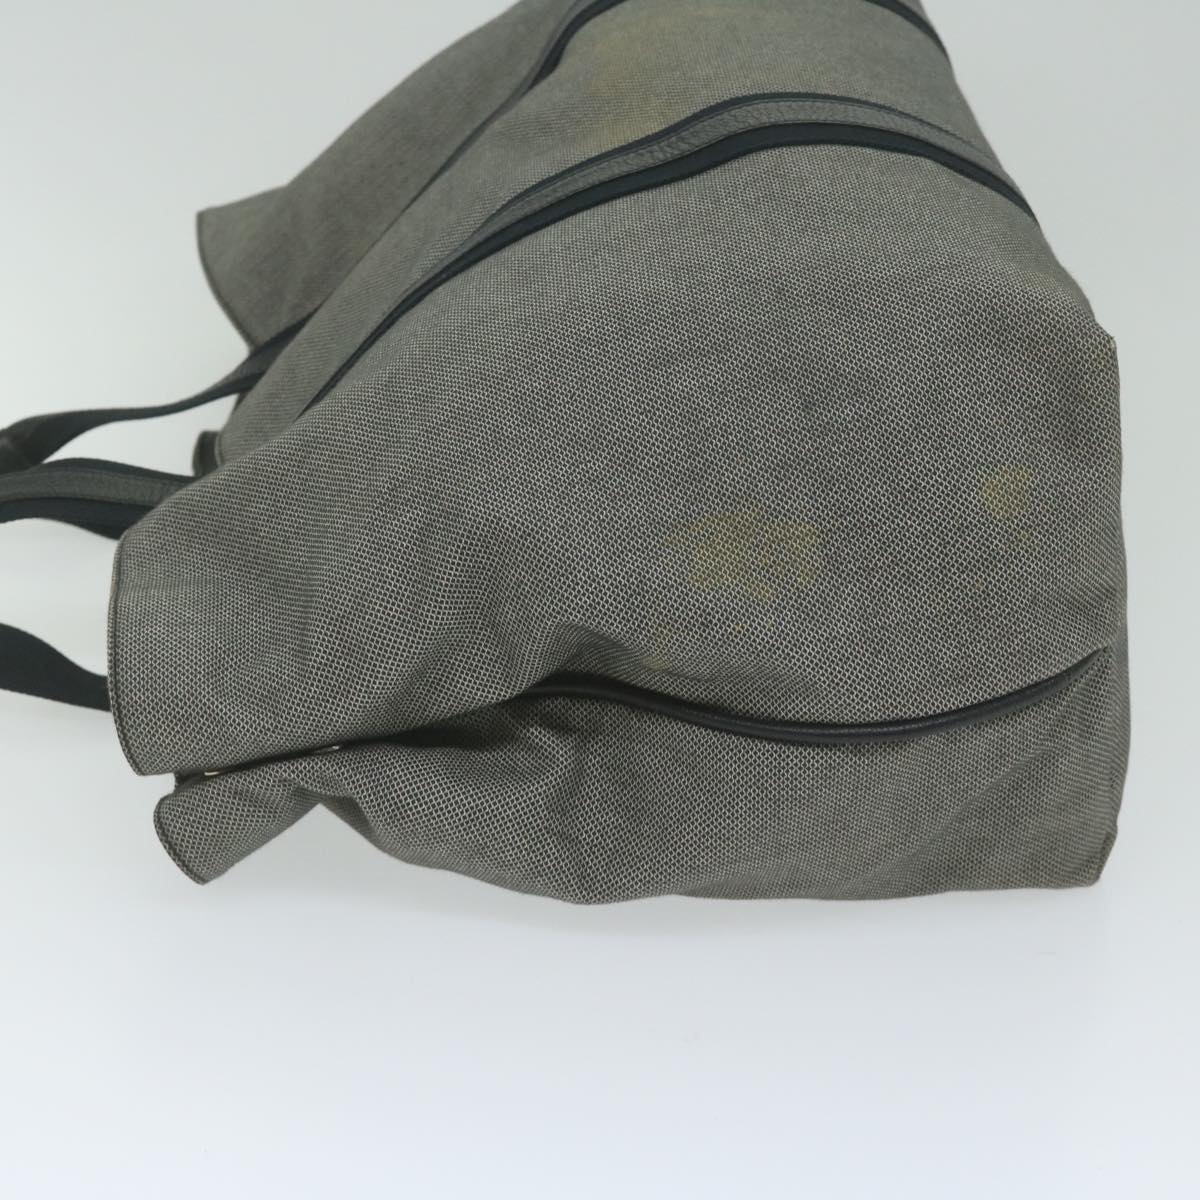 BOTTEGAVENETA Tote Bag Canvas Gray Auth bs11029